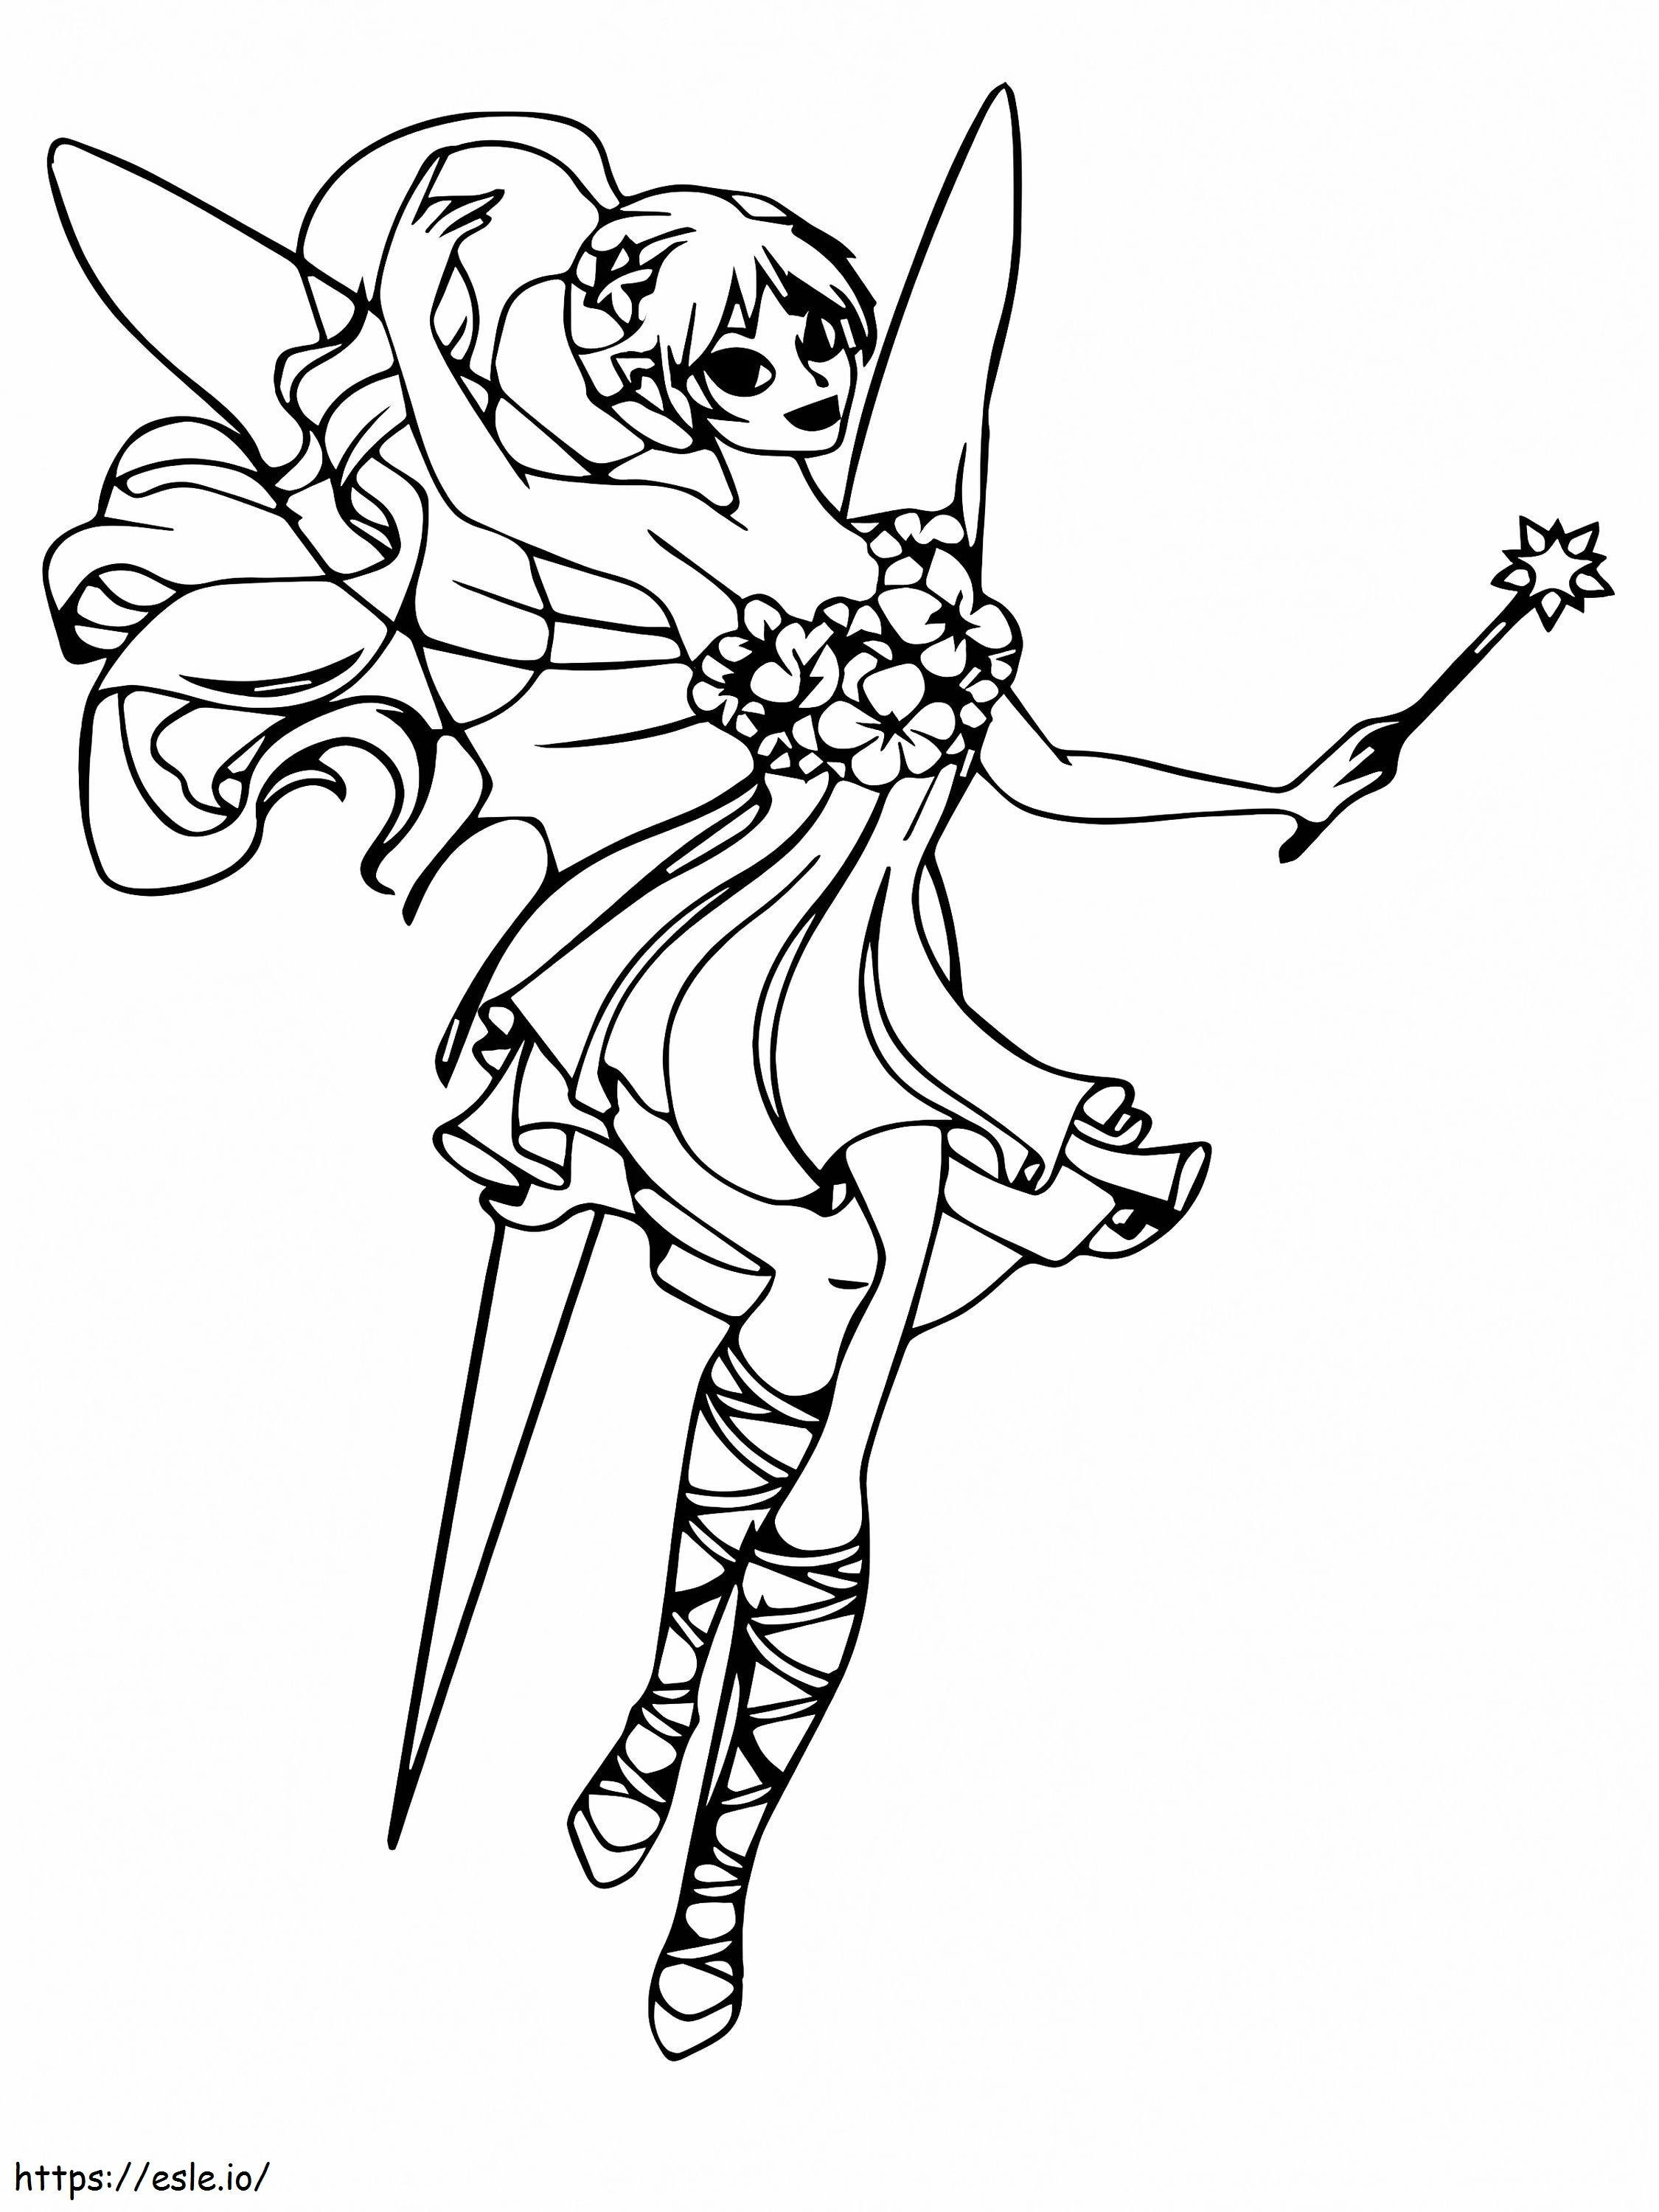 Delightful Fairy Princess coloring page